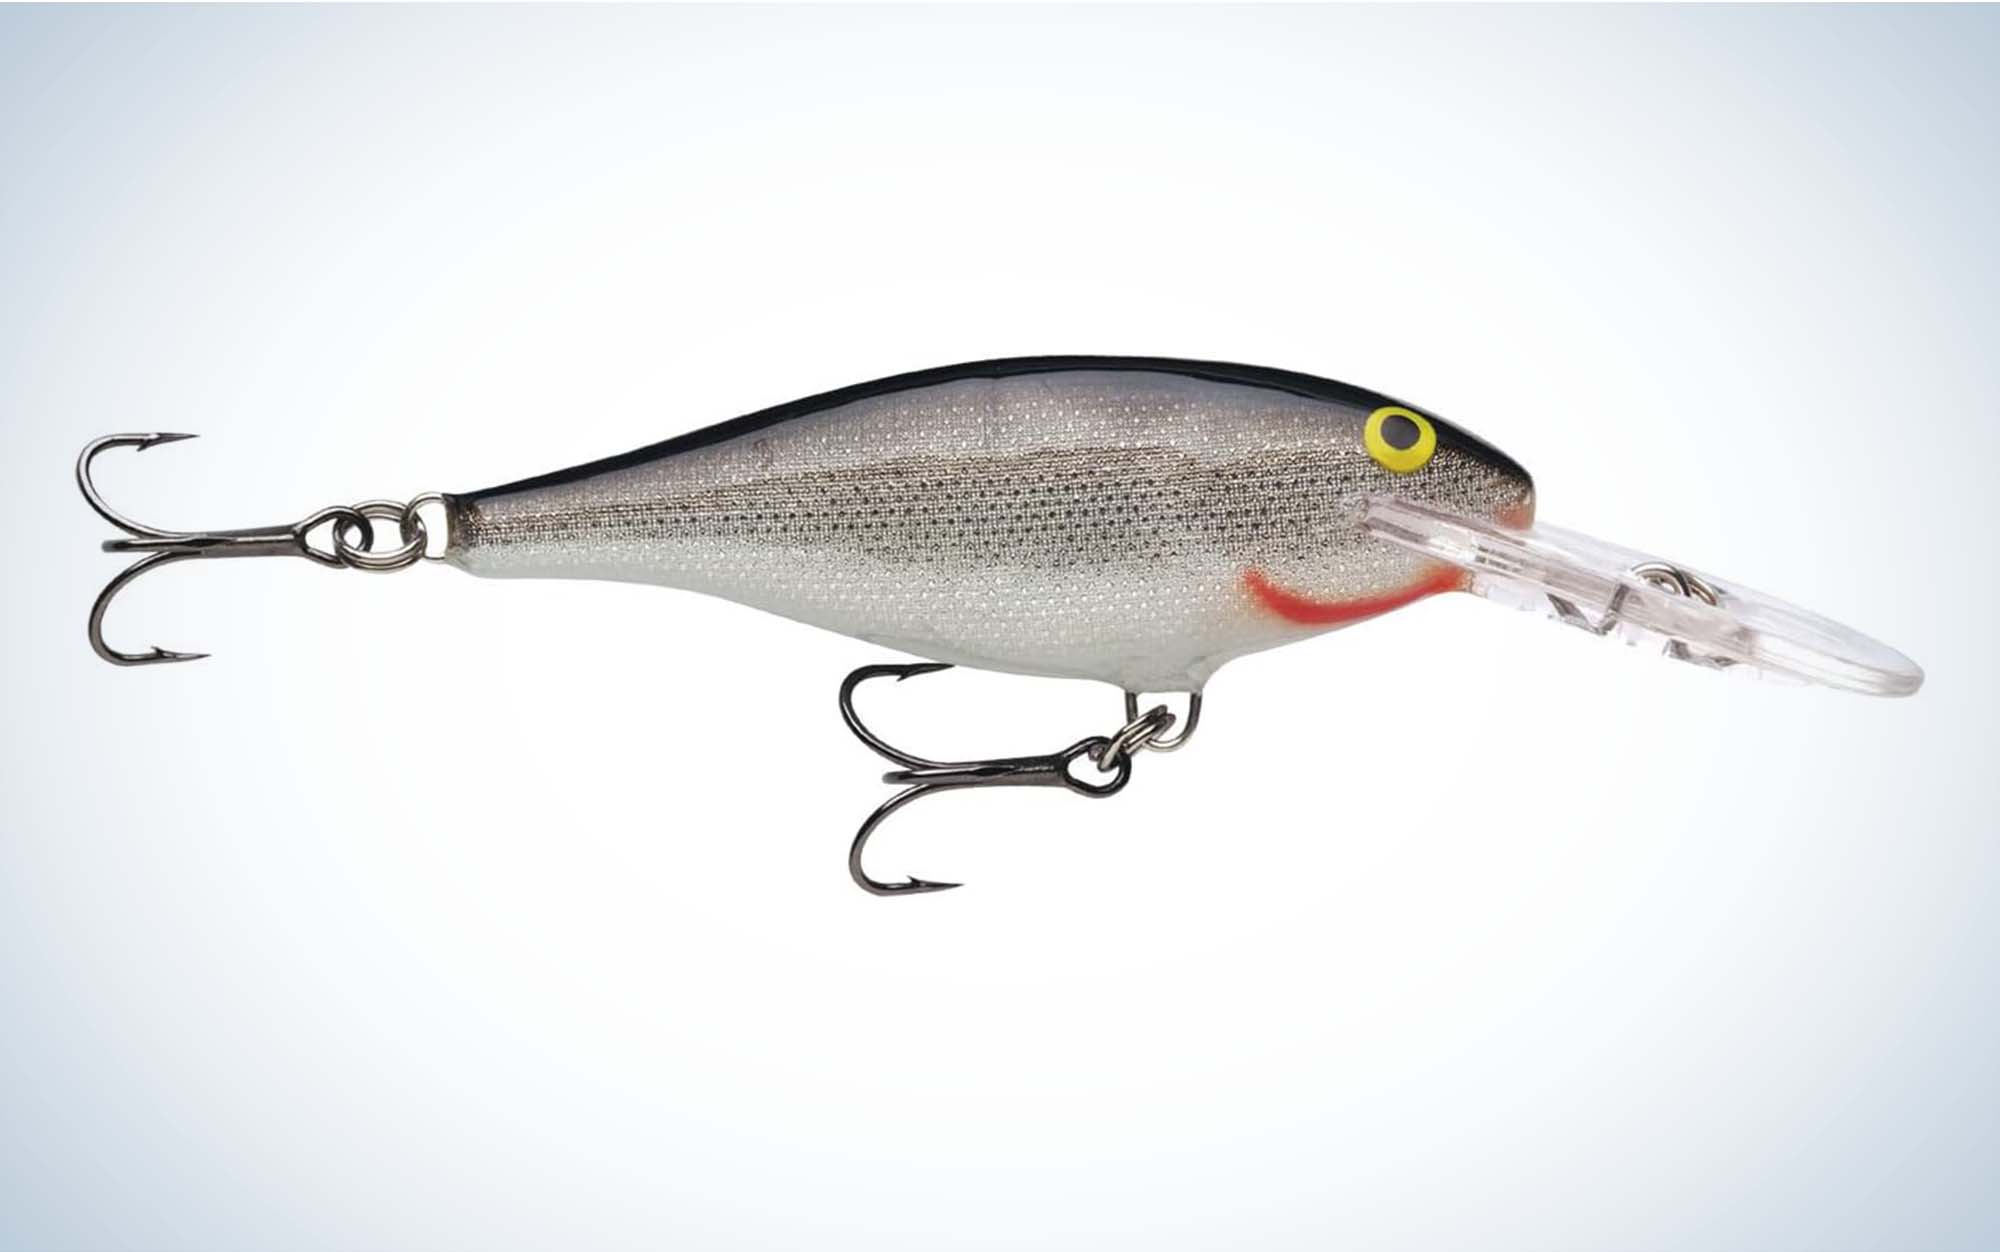 Top 5 spring bass fishing baits